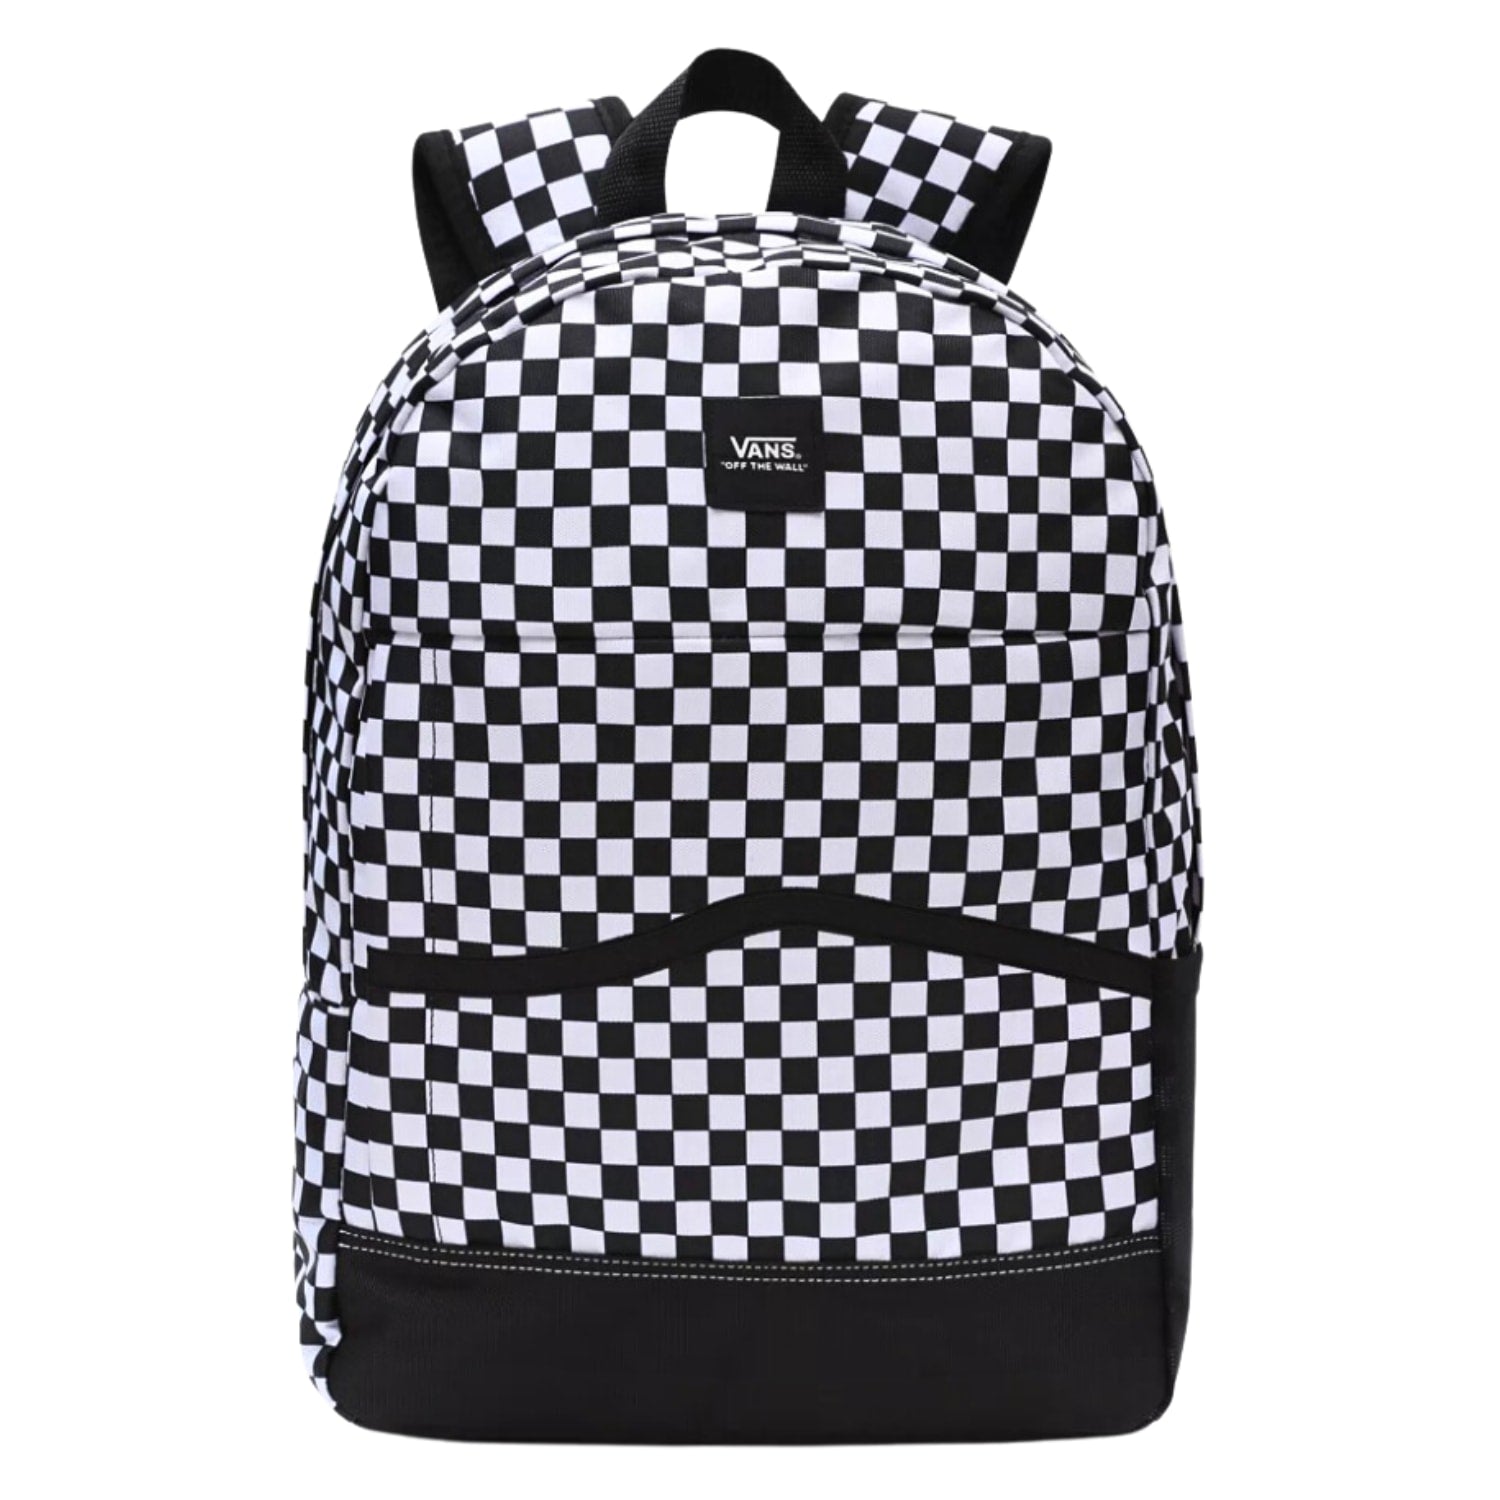 Vans Construct Skool Backpack - Black White Checkers - Backpack by Vans One Size